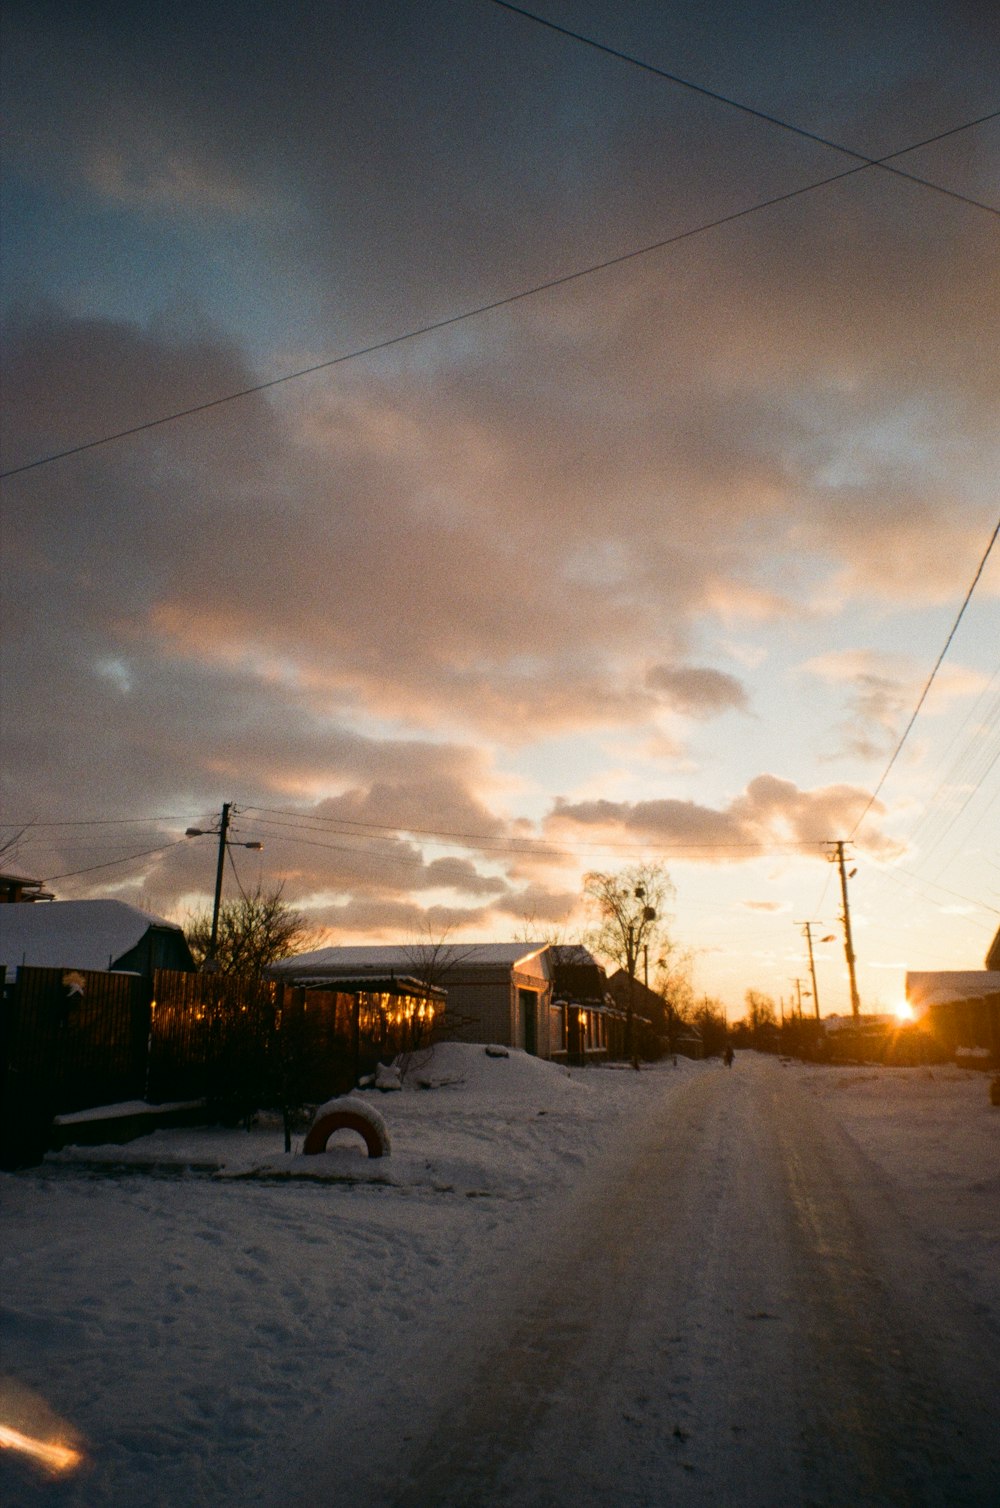 the sun is setting on a snowy street